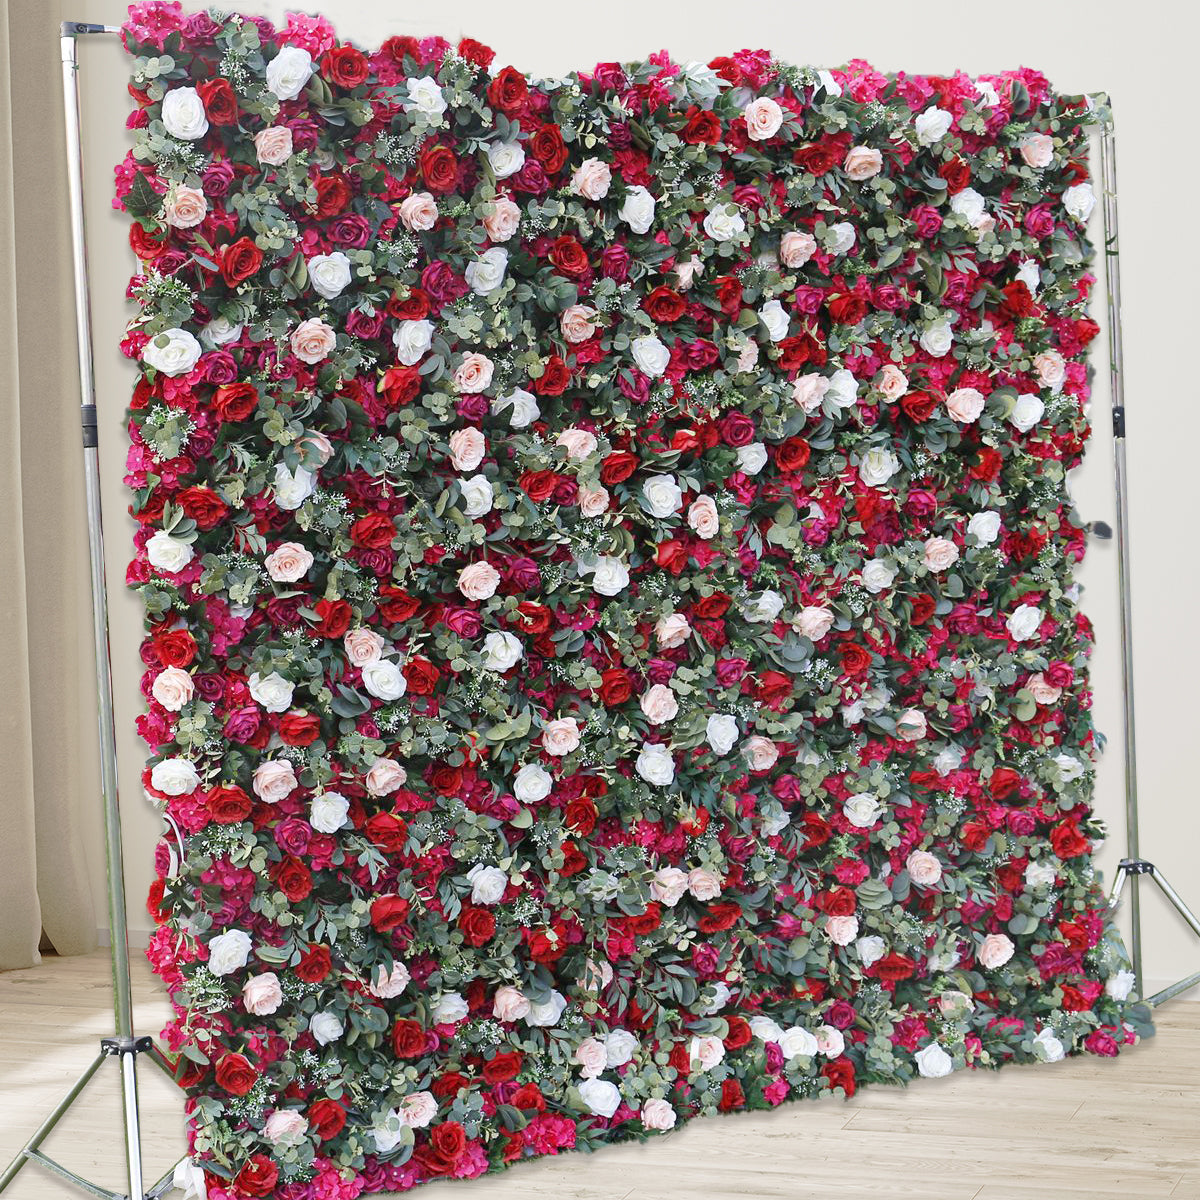 3D Artificial Flower Wall Arrangement Wedding Party Birthday Backdrop Decor HQ3502